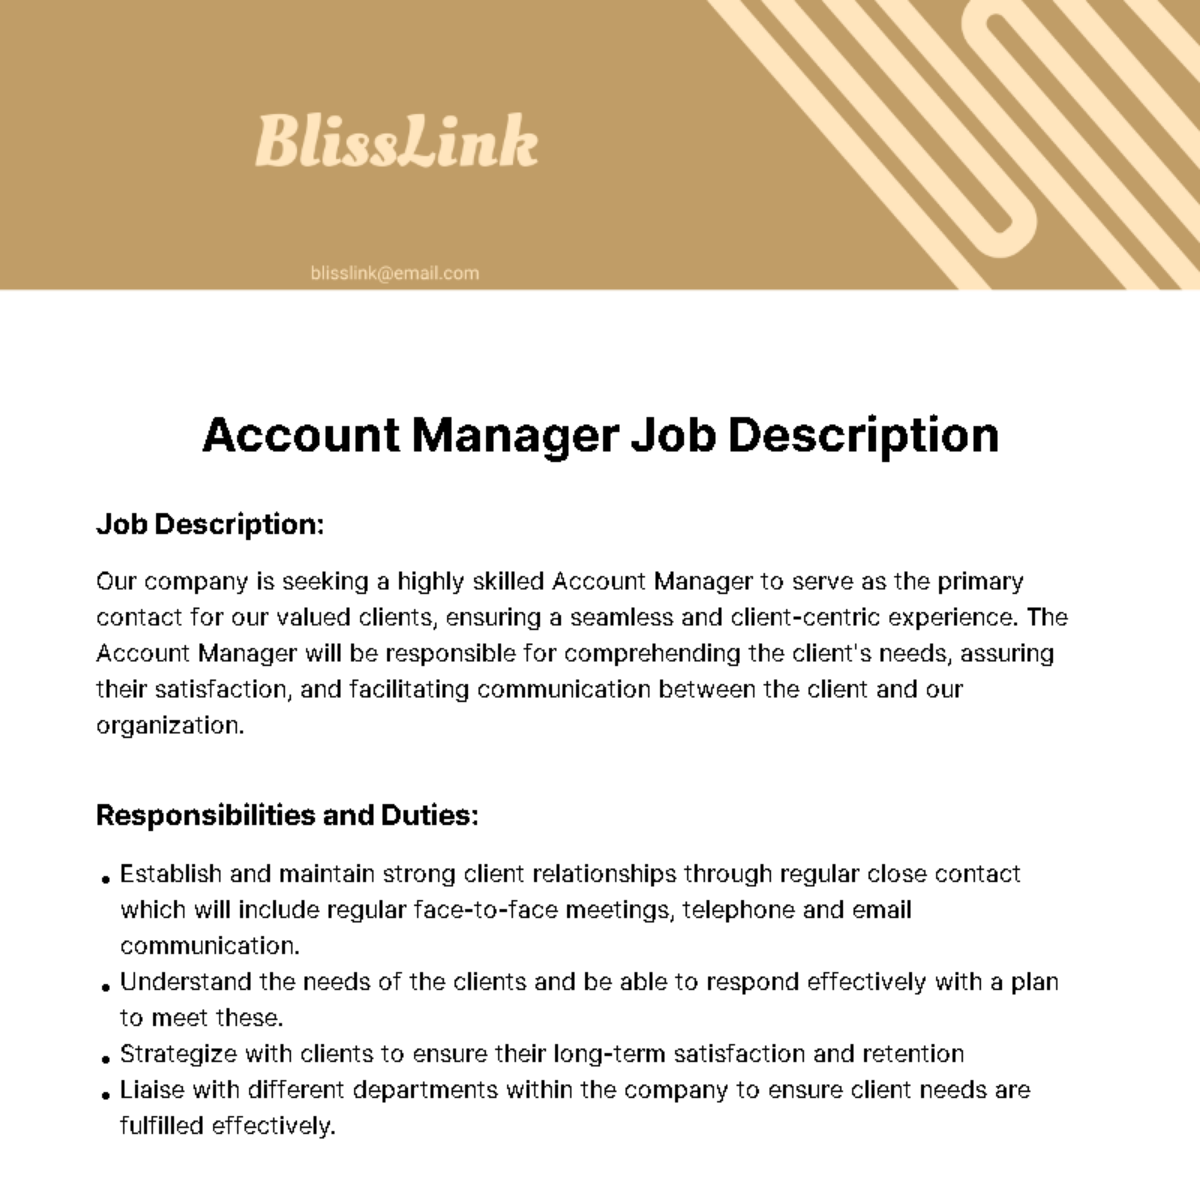 Account Manager Job Description Template